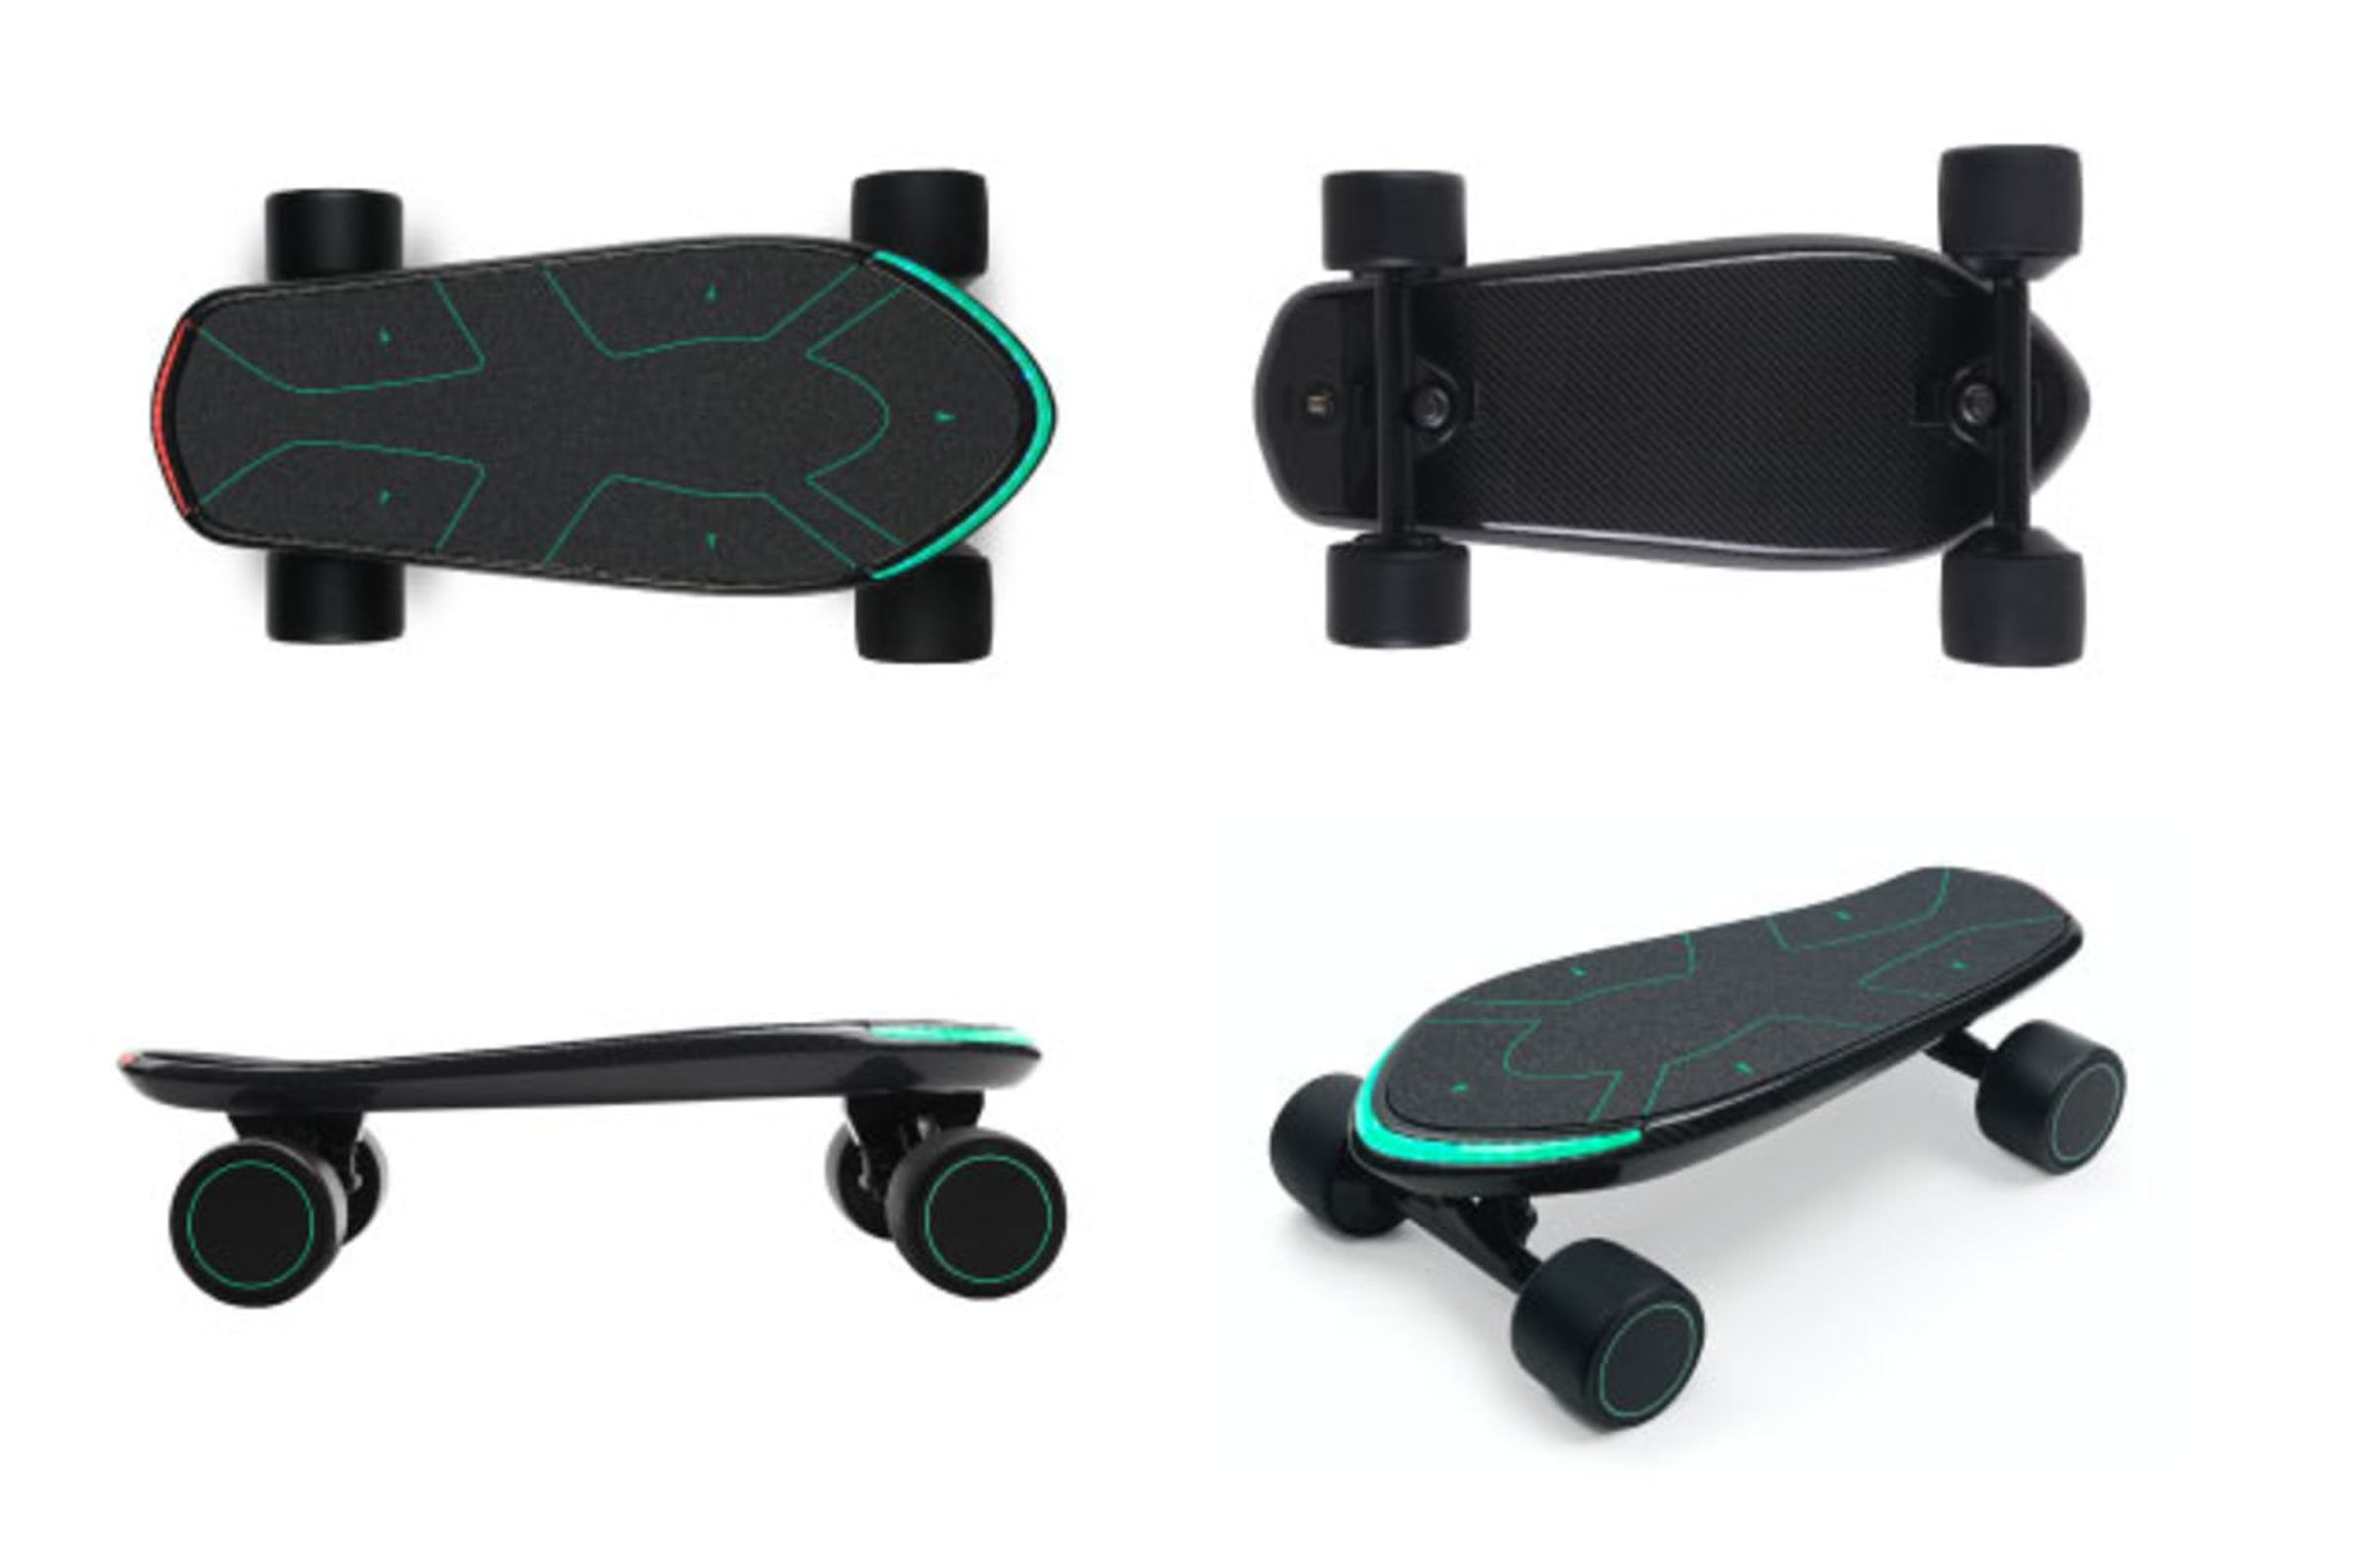 The Spectra electric skateboard from Guo’s company Walnutt.